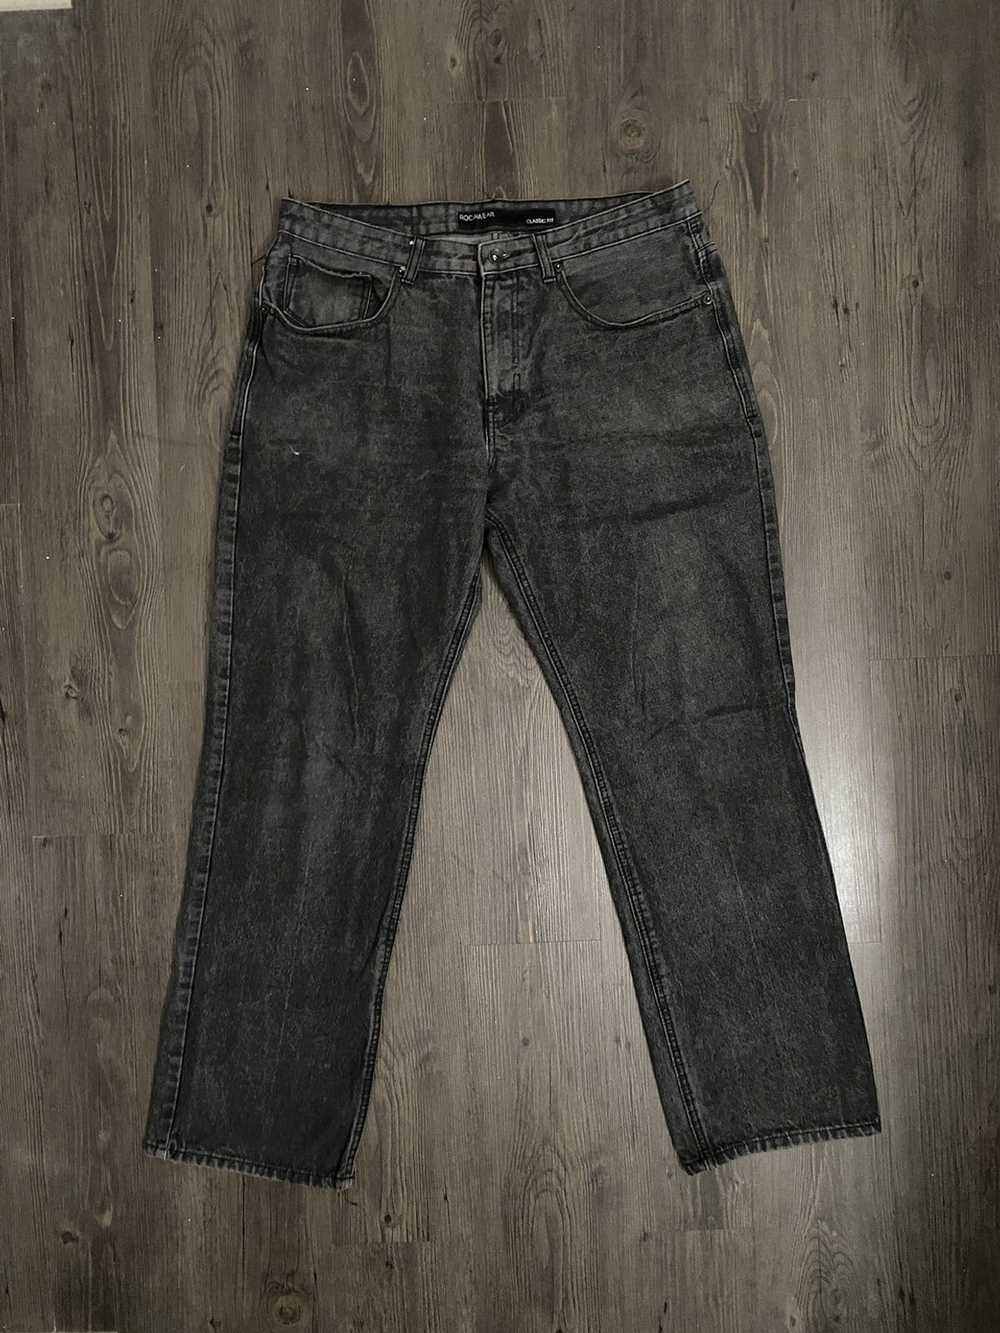 Rocawear Vintage Rocawear Jeans - image 2